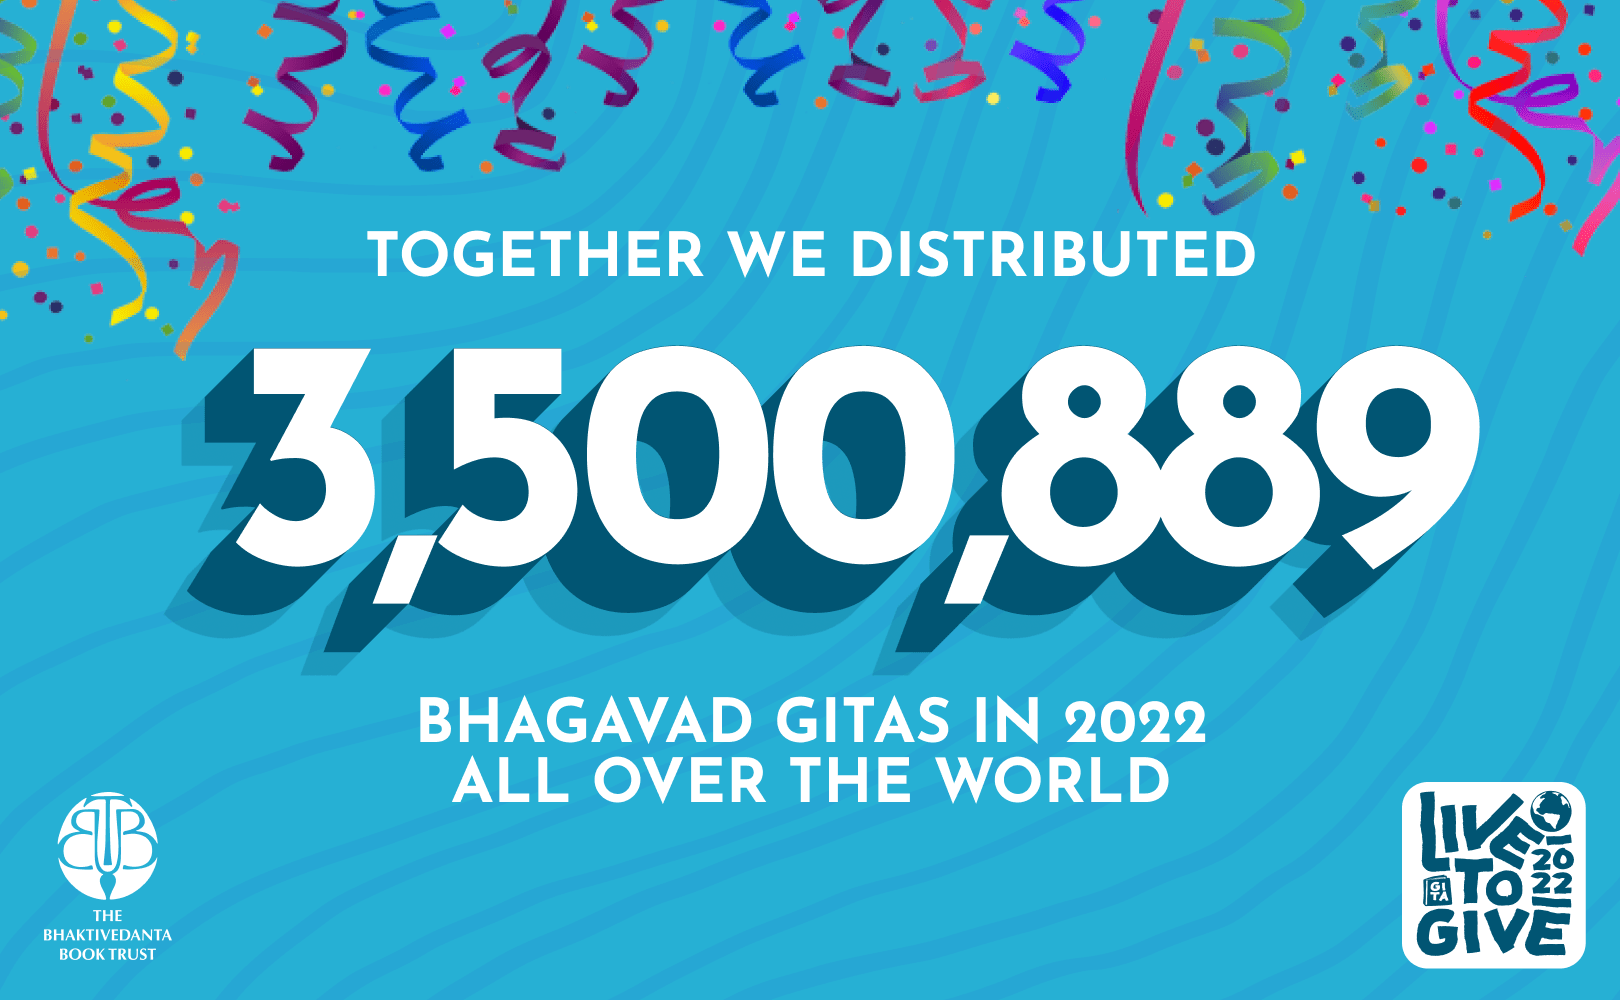 Live To Give Campaign Distributes 3.5 Million Bhagavad-gitas Worldwide; Smashes Goal | ISKCON News